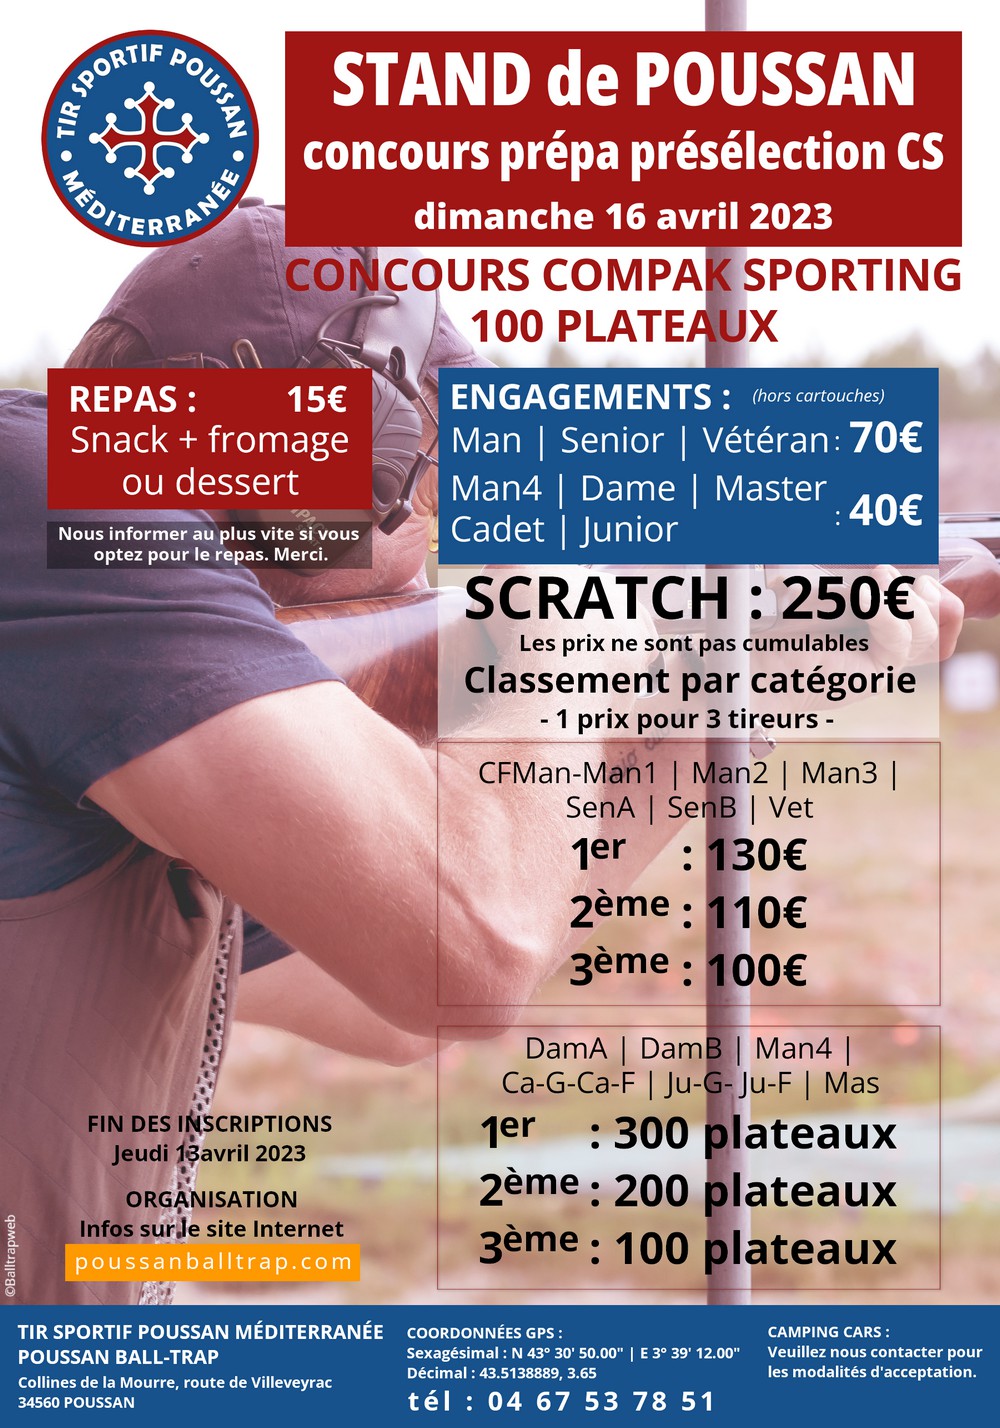 Concours compak sporting Poussan ball-trap